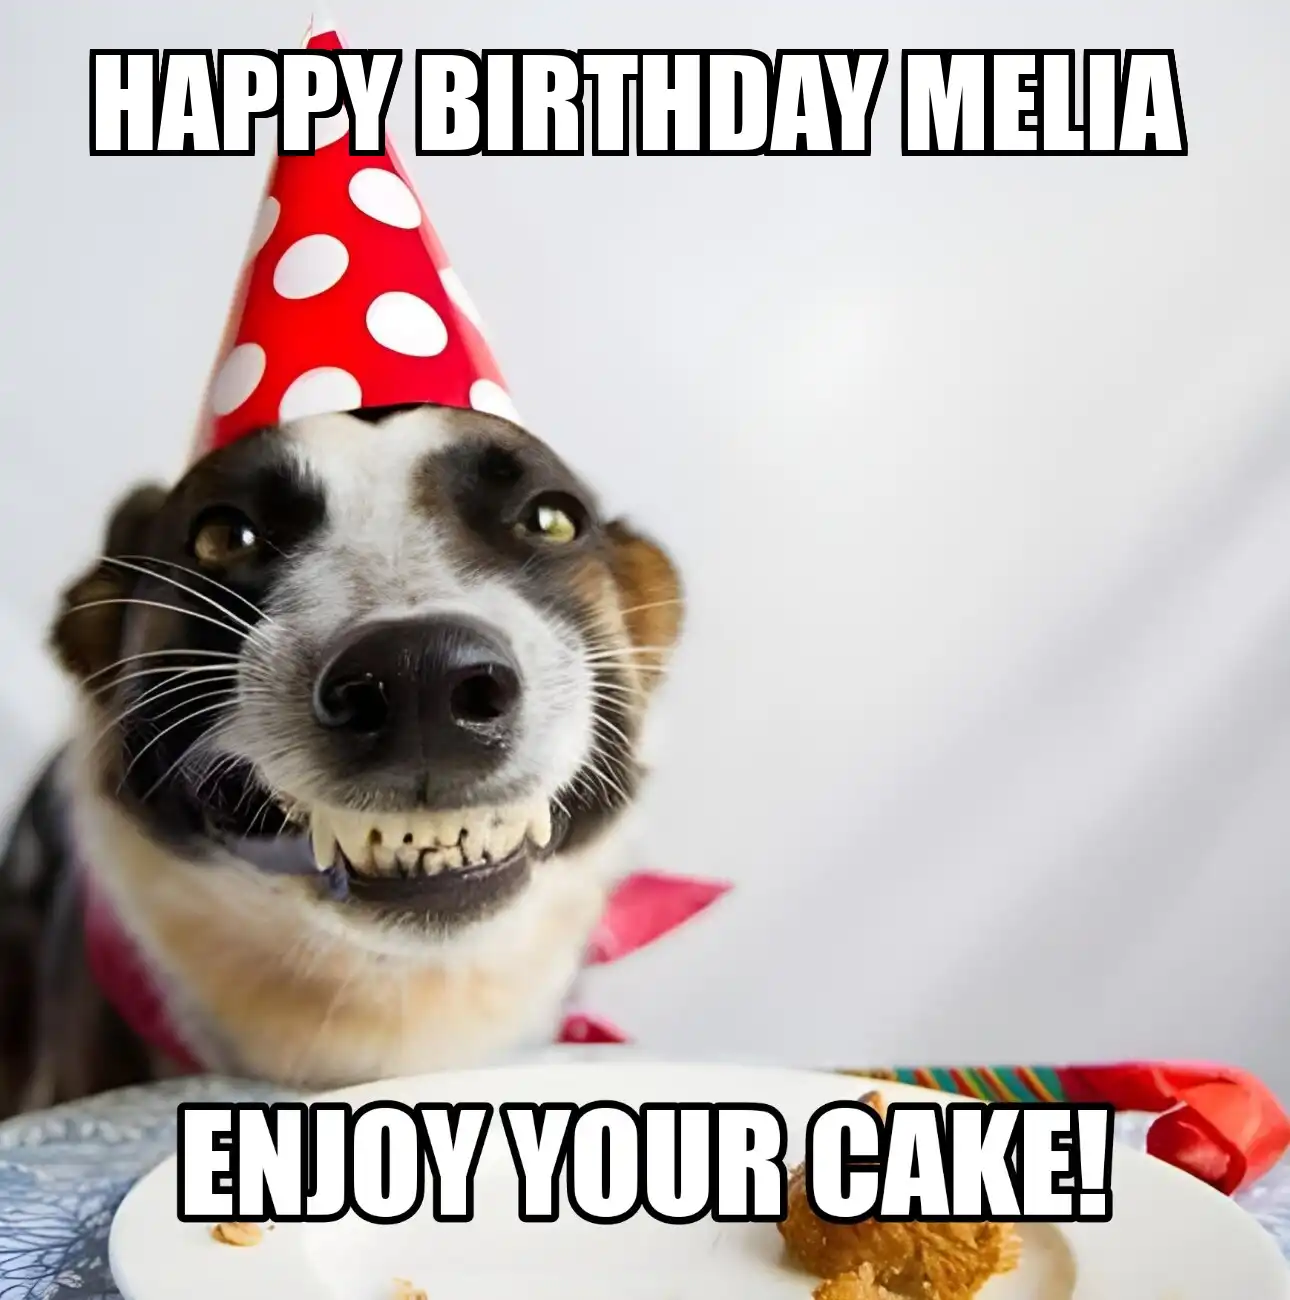 Happy Birthday Melia Enjoy Your Cake Dog Meme